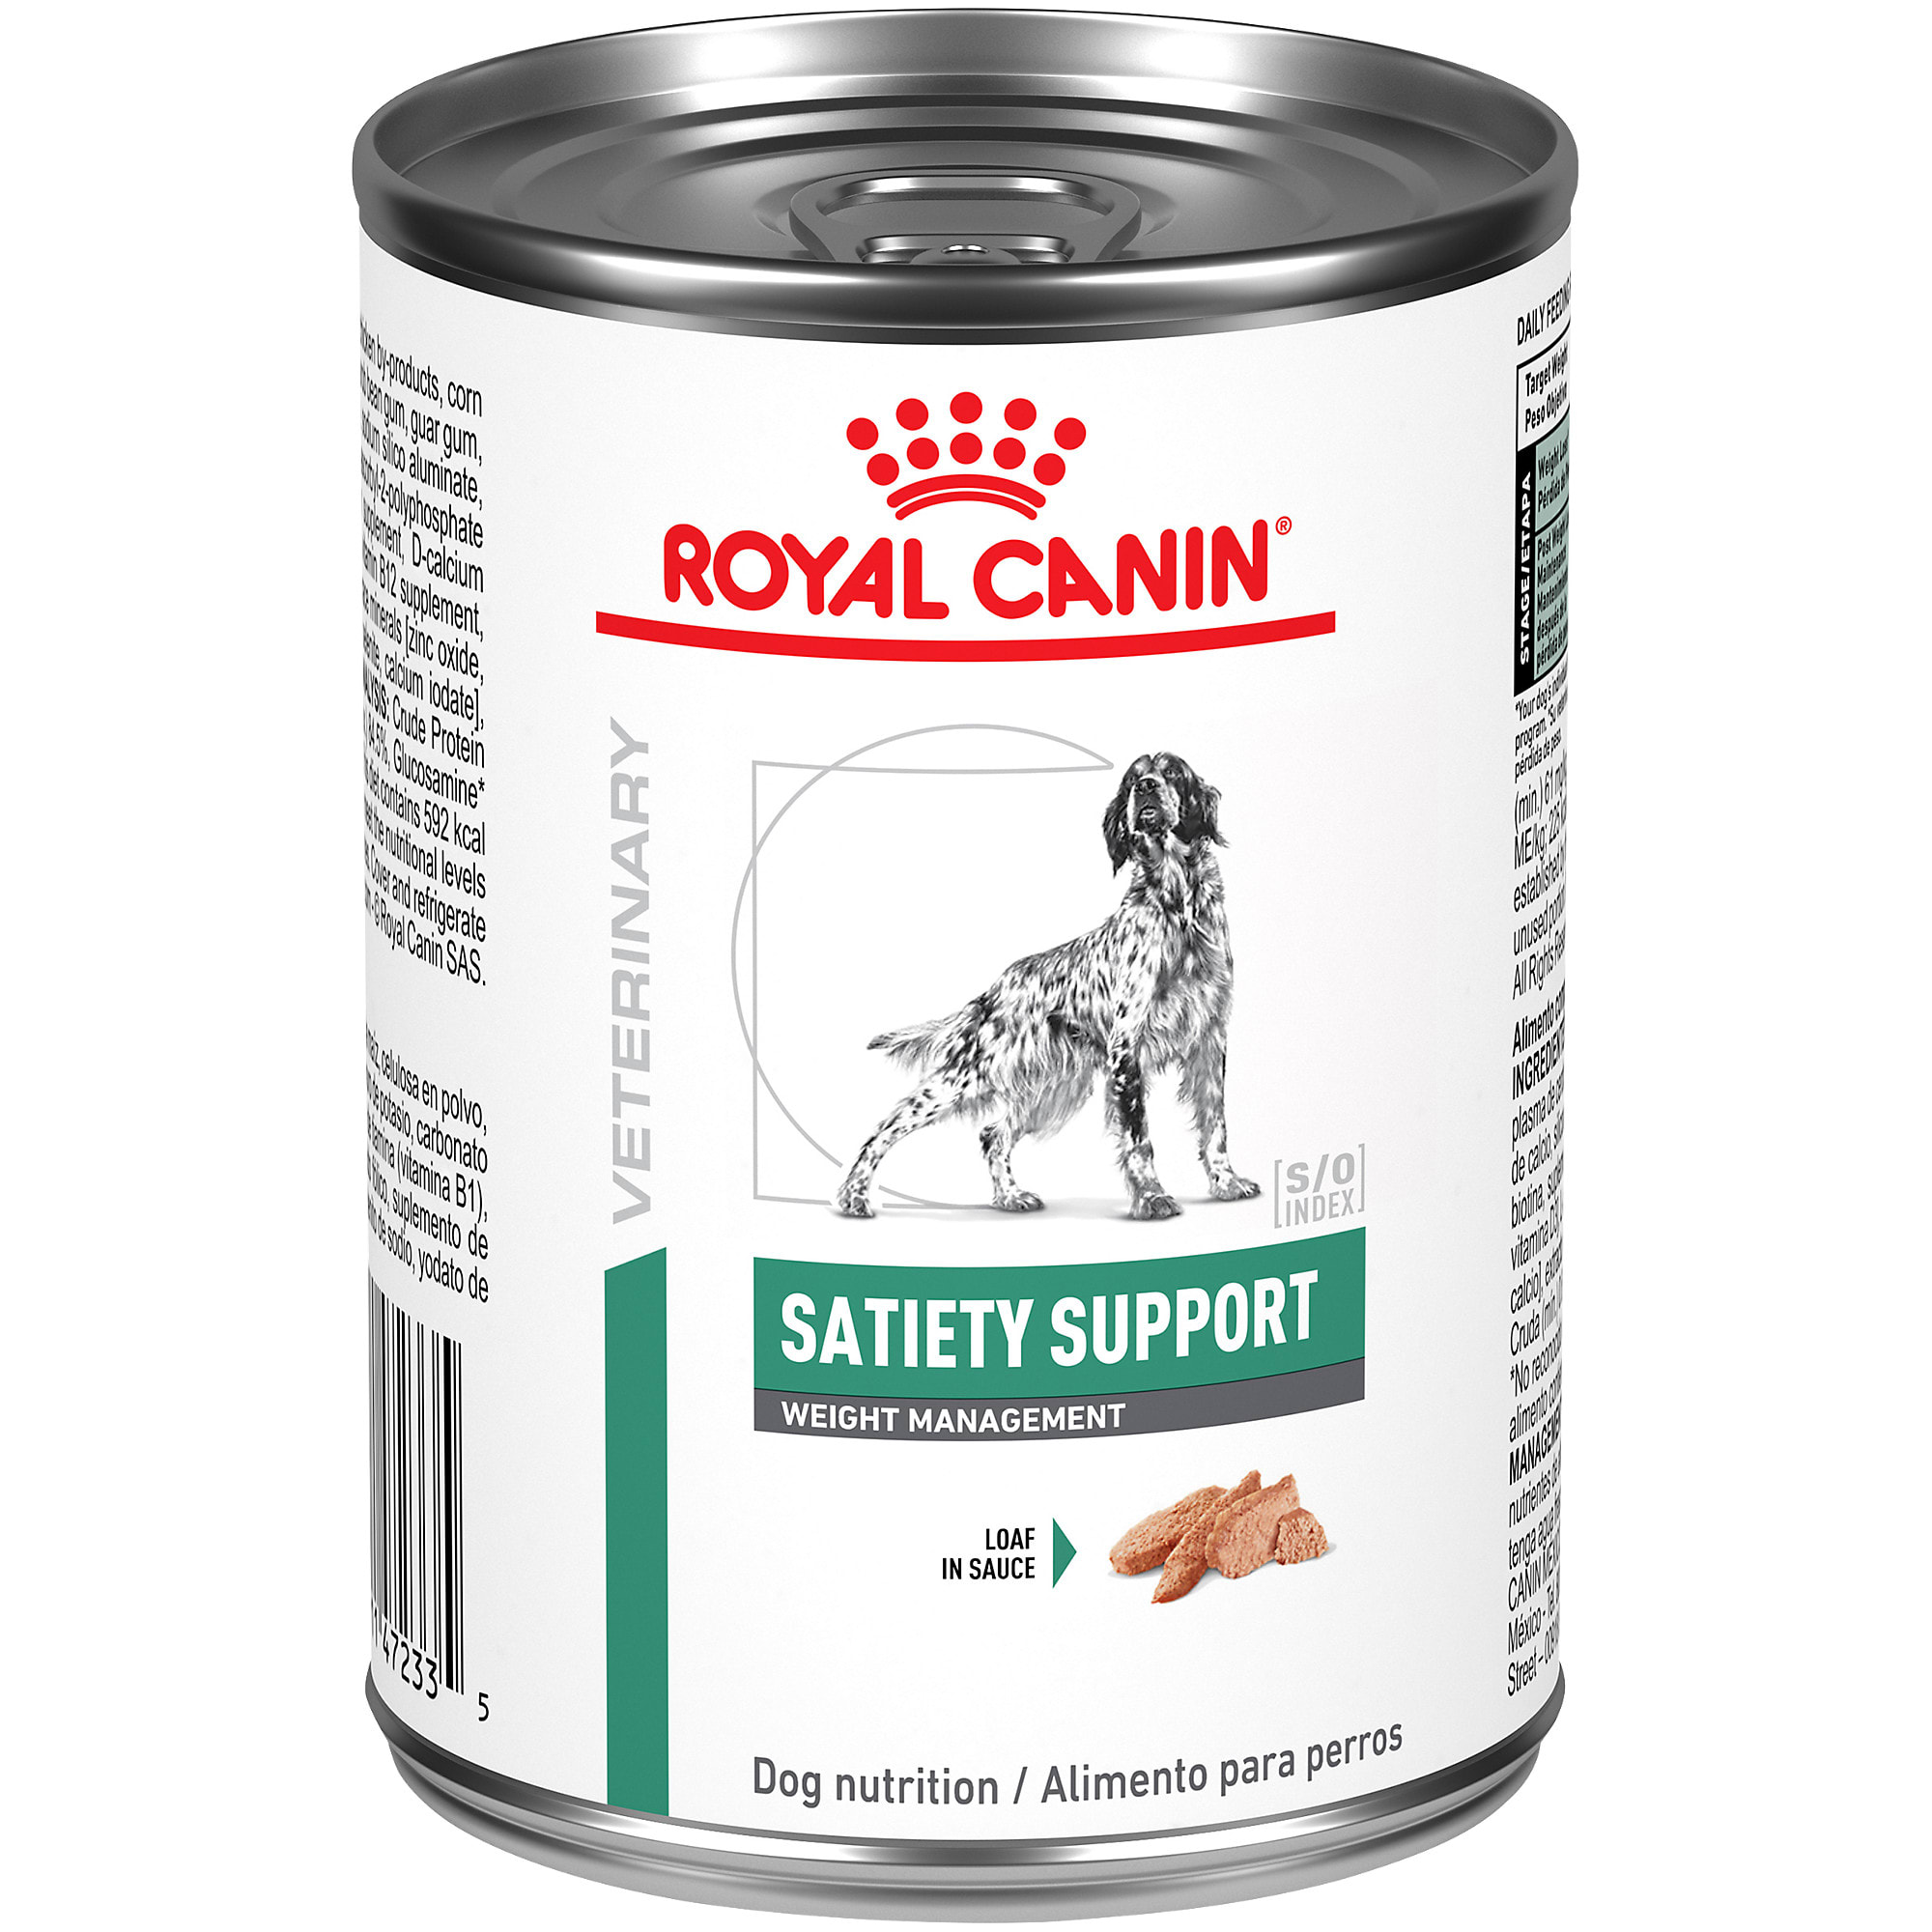 royal canin obesity